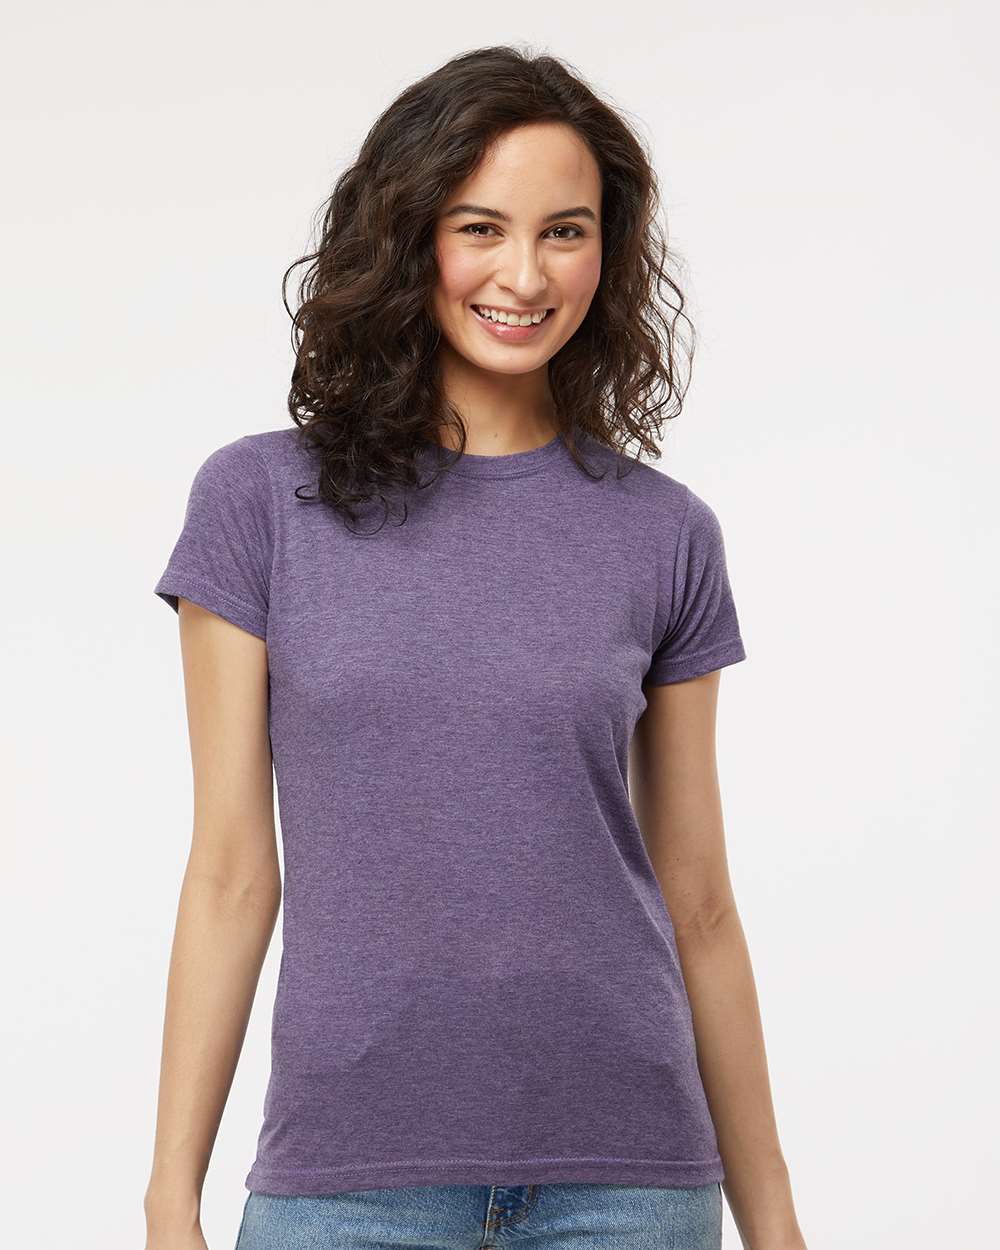 M&O Women’s Deluxe Blend T-Shirt #3540 Heather Purple